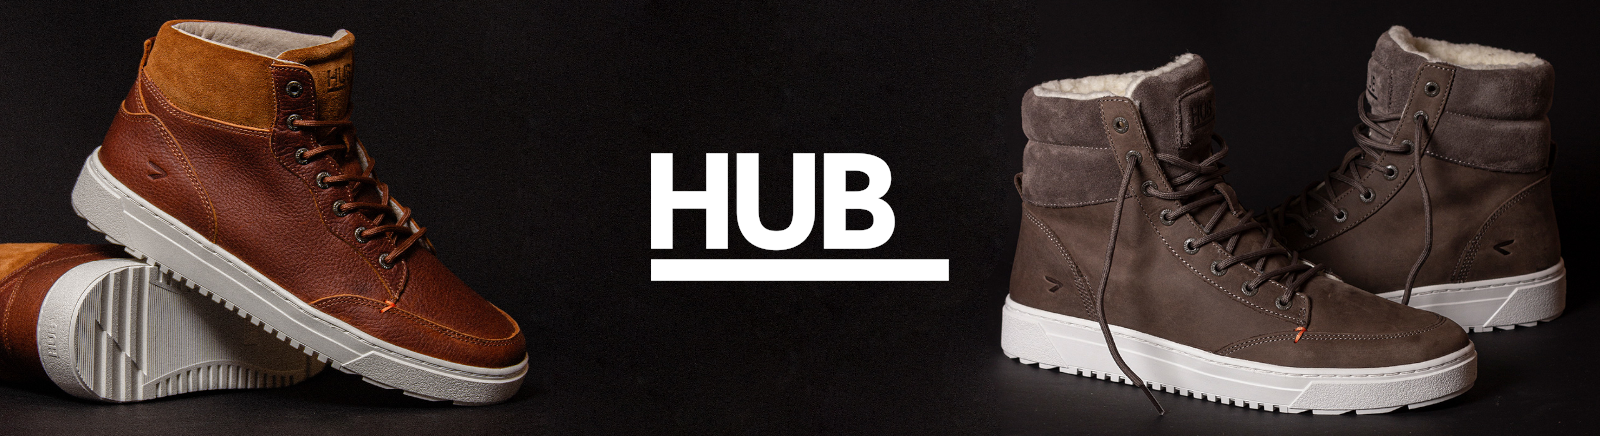 Juppen: HUB Boots für Herren online shoppen